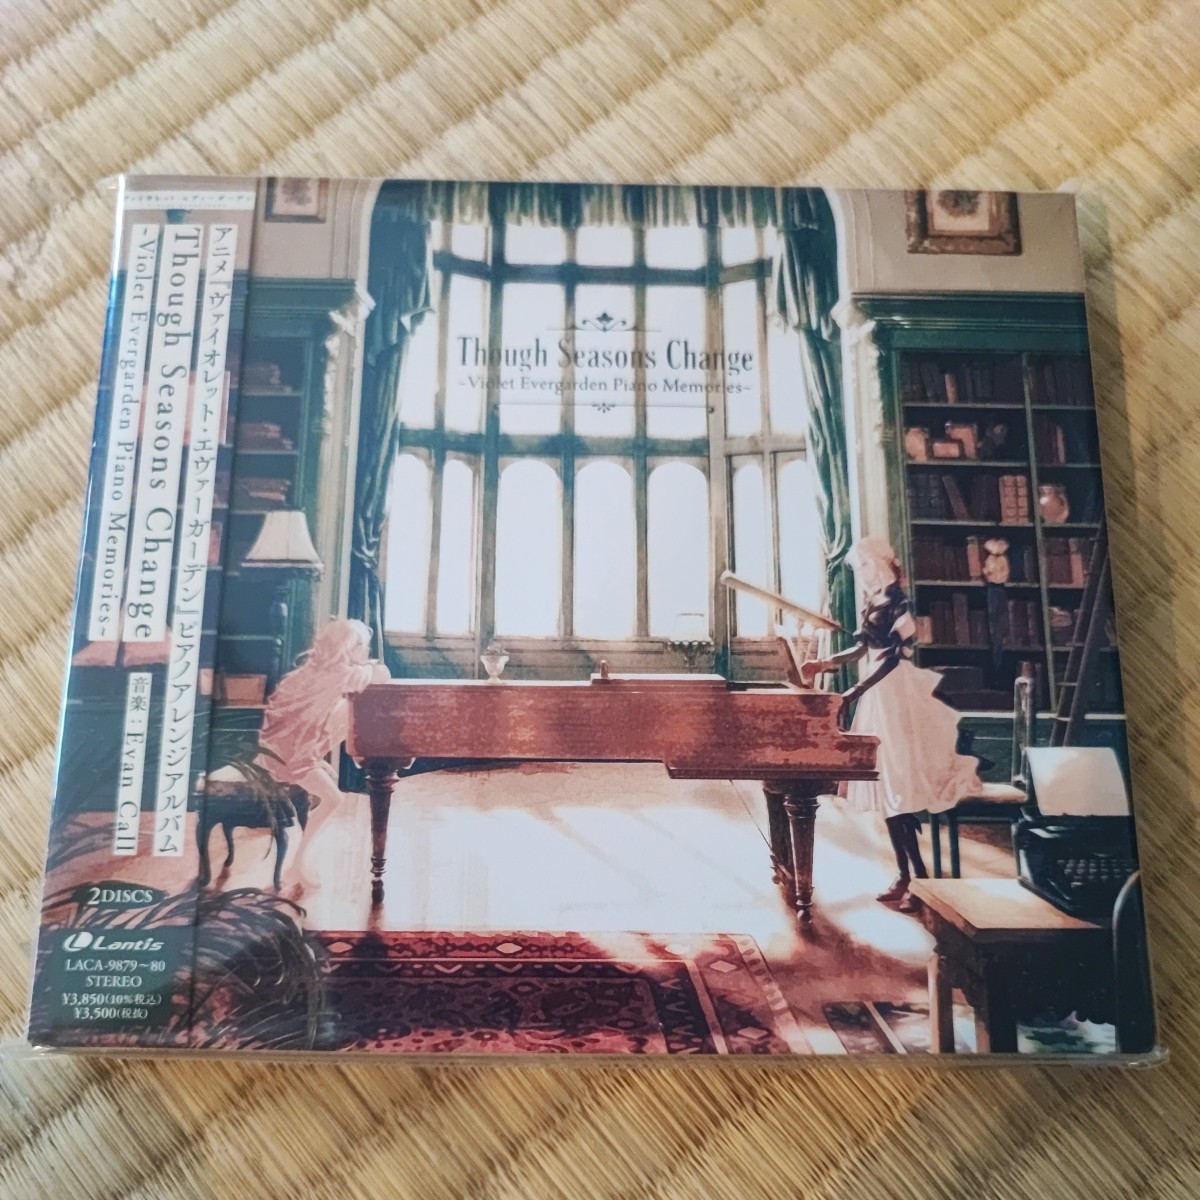 [CD] 「ヴァイオレットエヴァーガーデン」 ピアノアルバムThough Seasons Change〜Violet Evergarden Piano Memories 2枚組　特典カード付_画像1